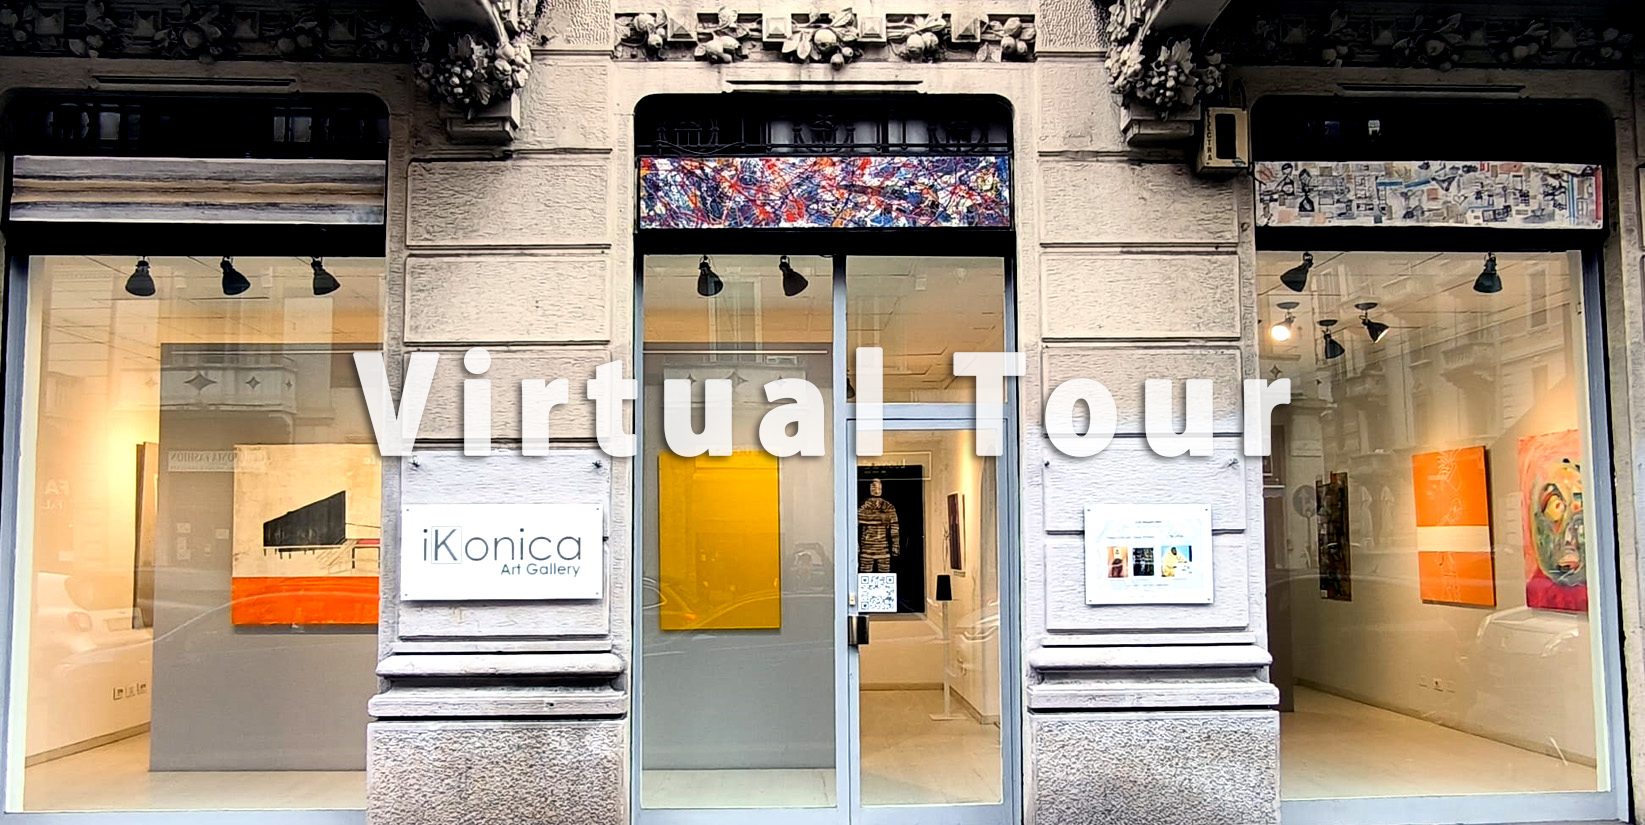 iKonica Art Gallery Milano: Virtual Tour